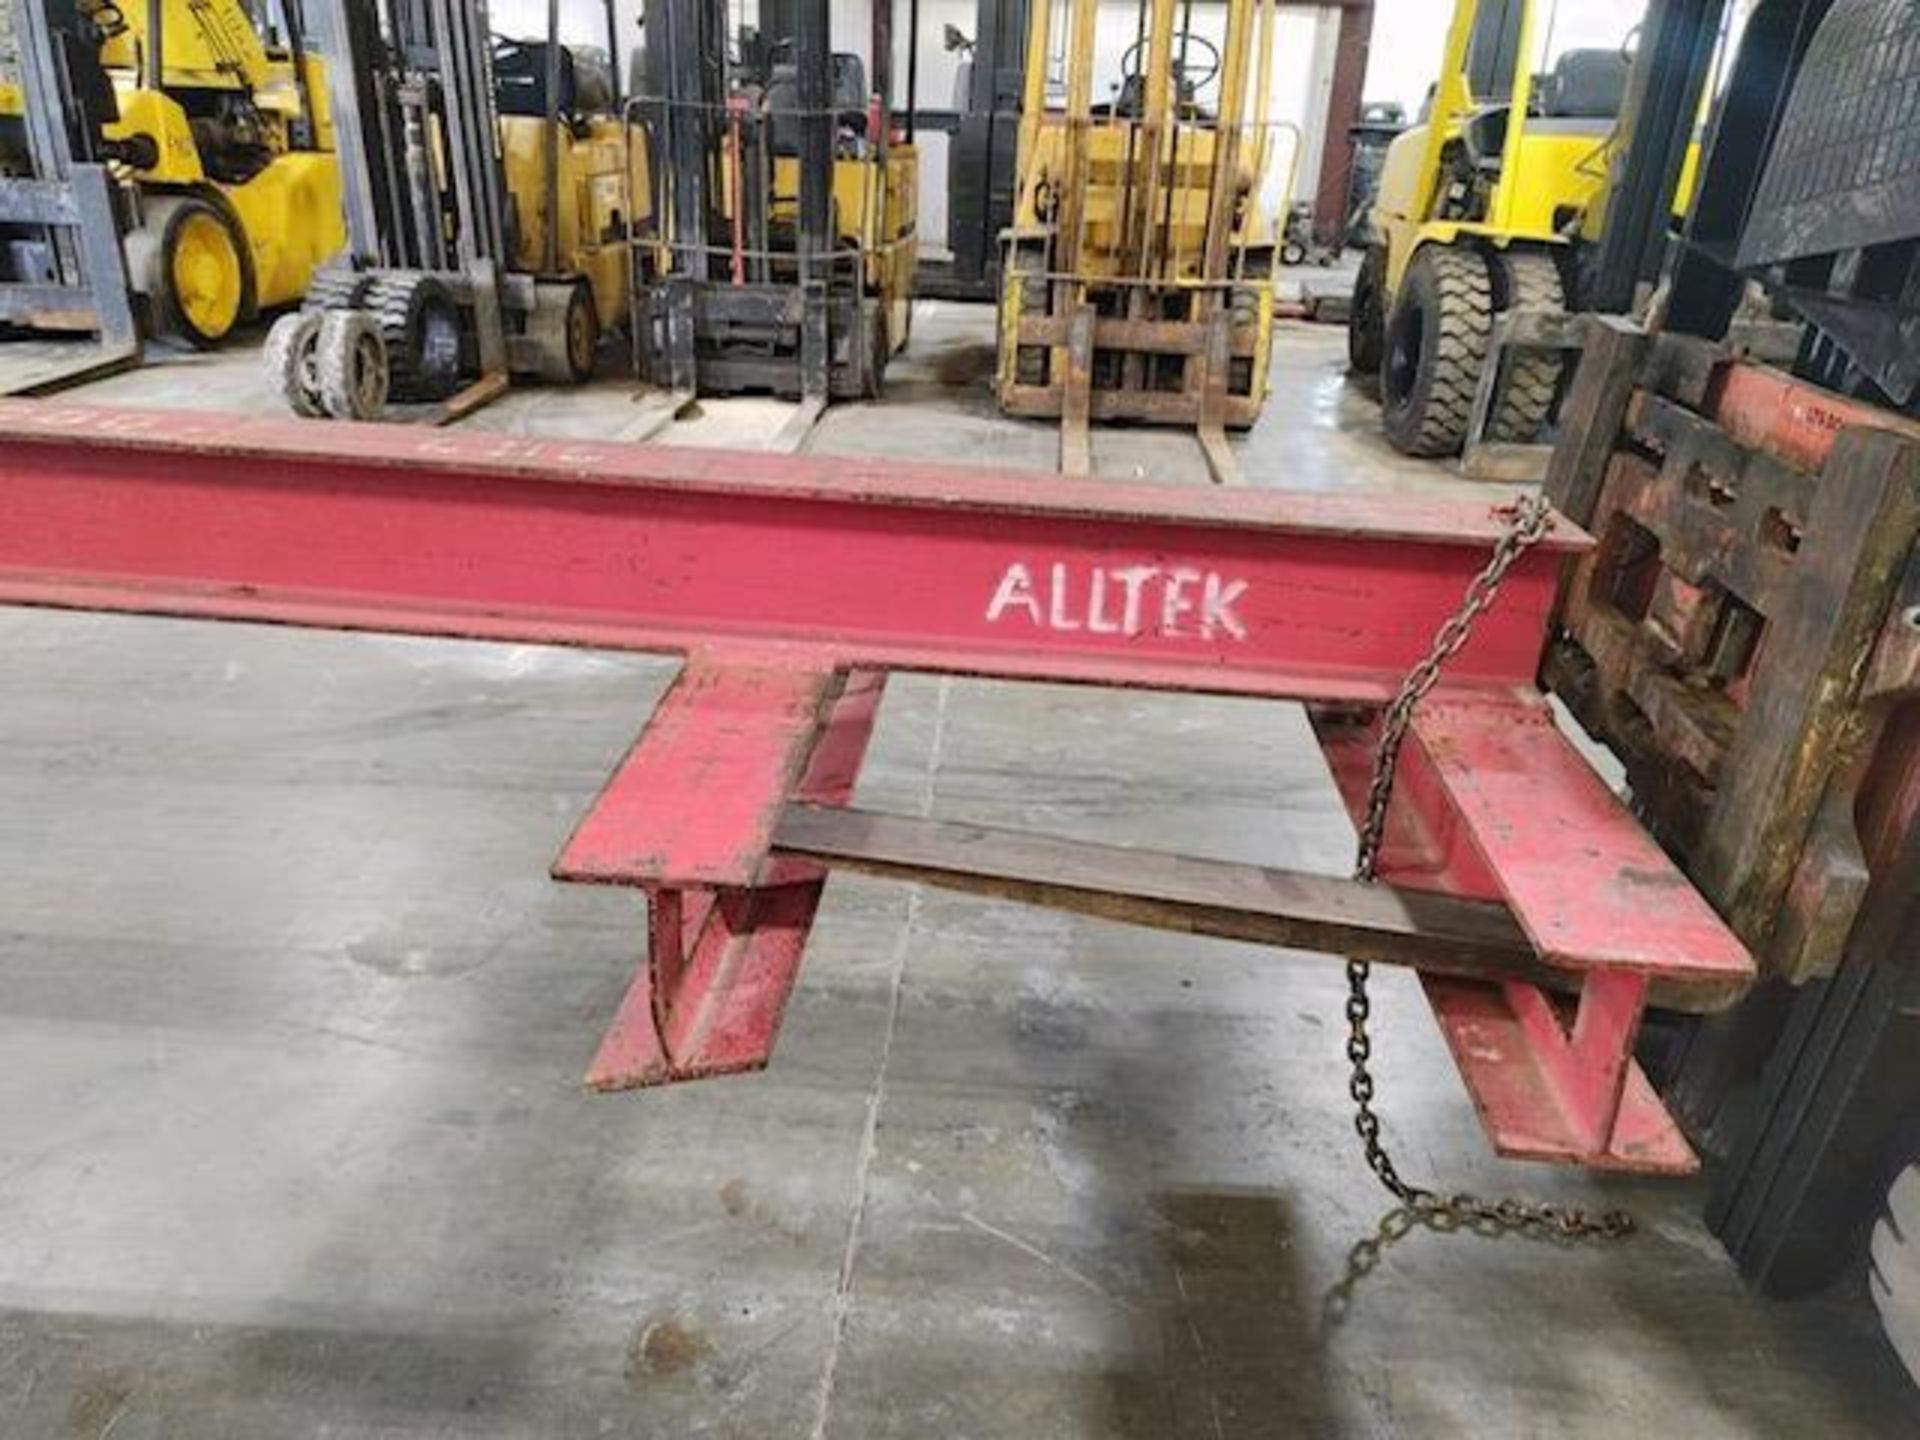 Alltek 14' boom, 10,000 lb. capacity